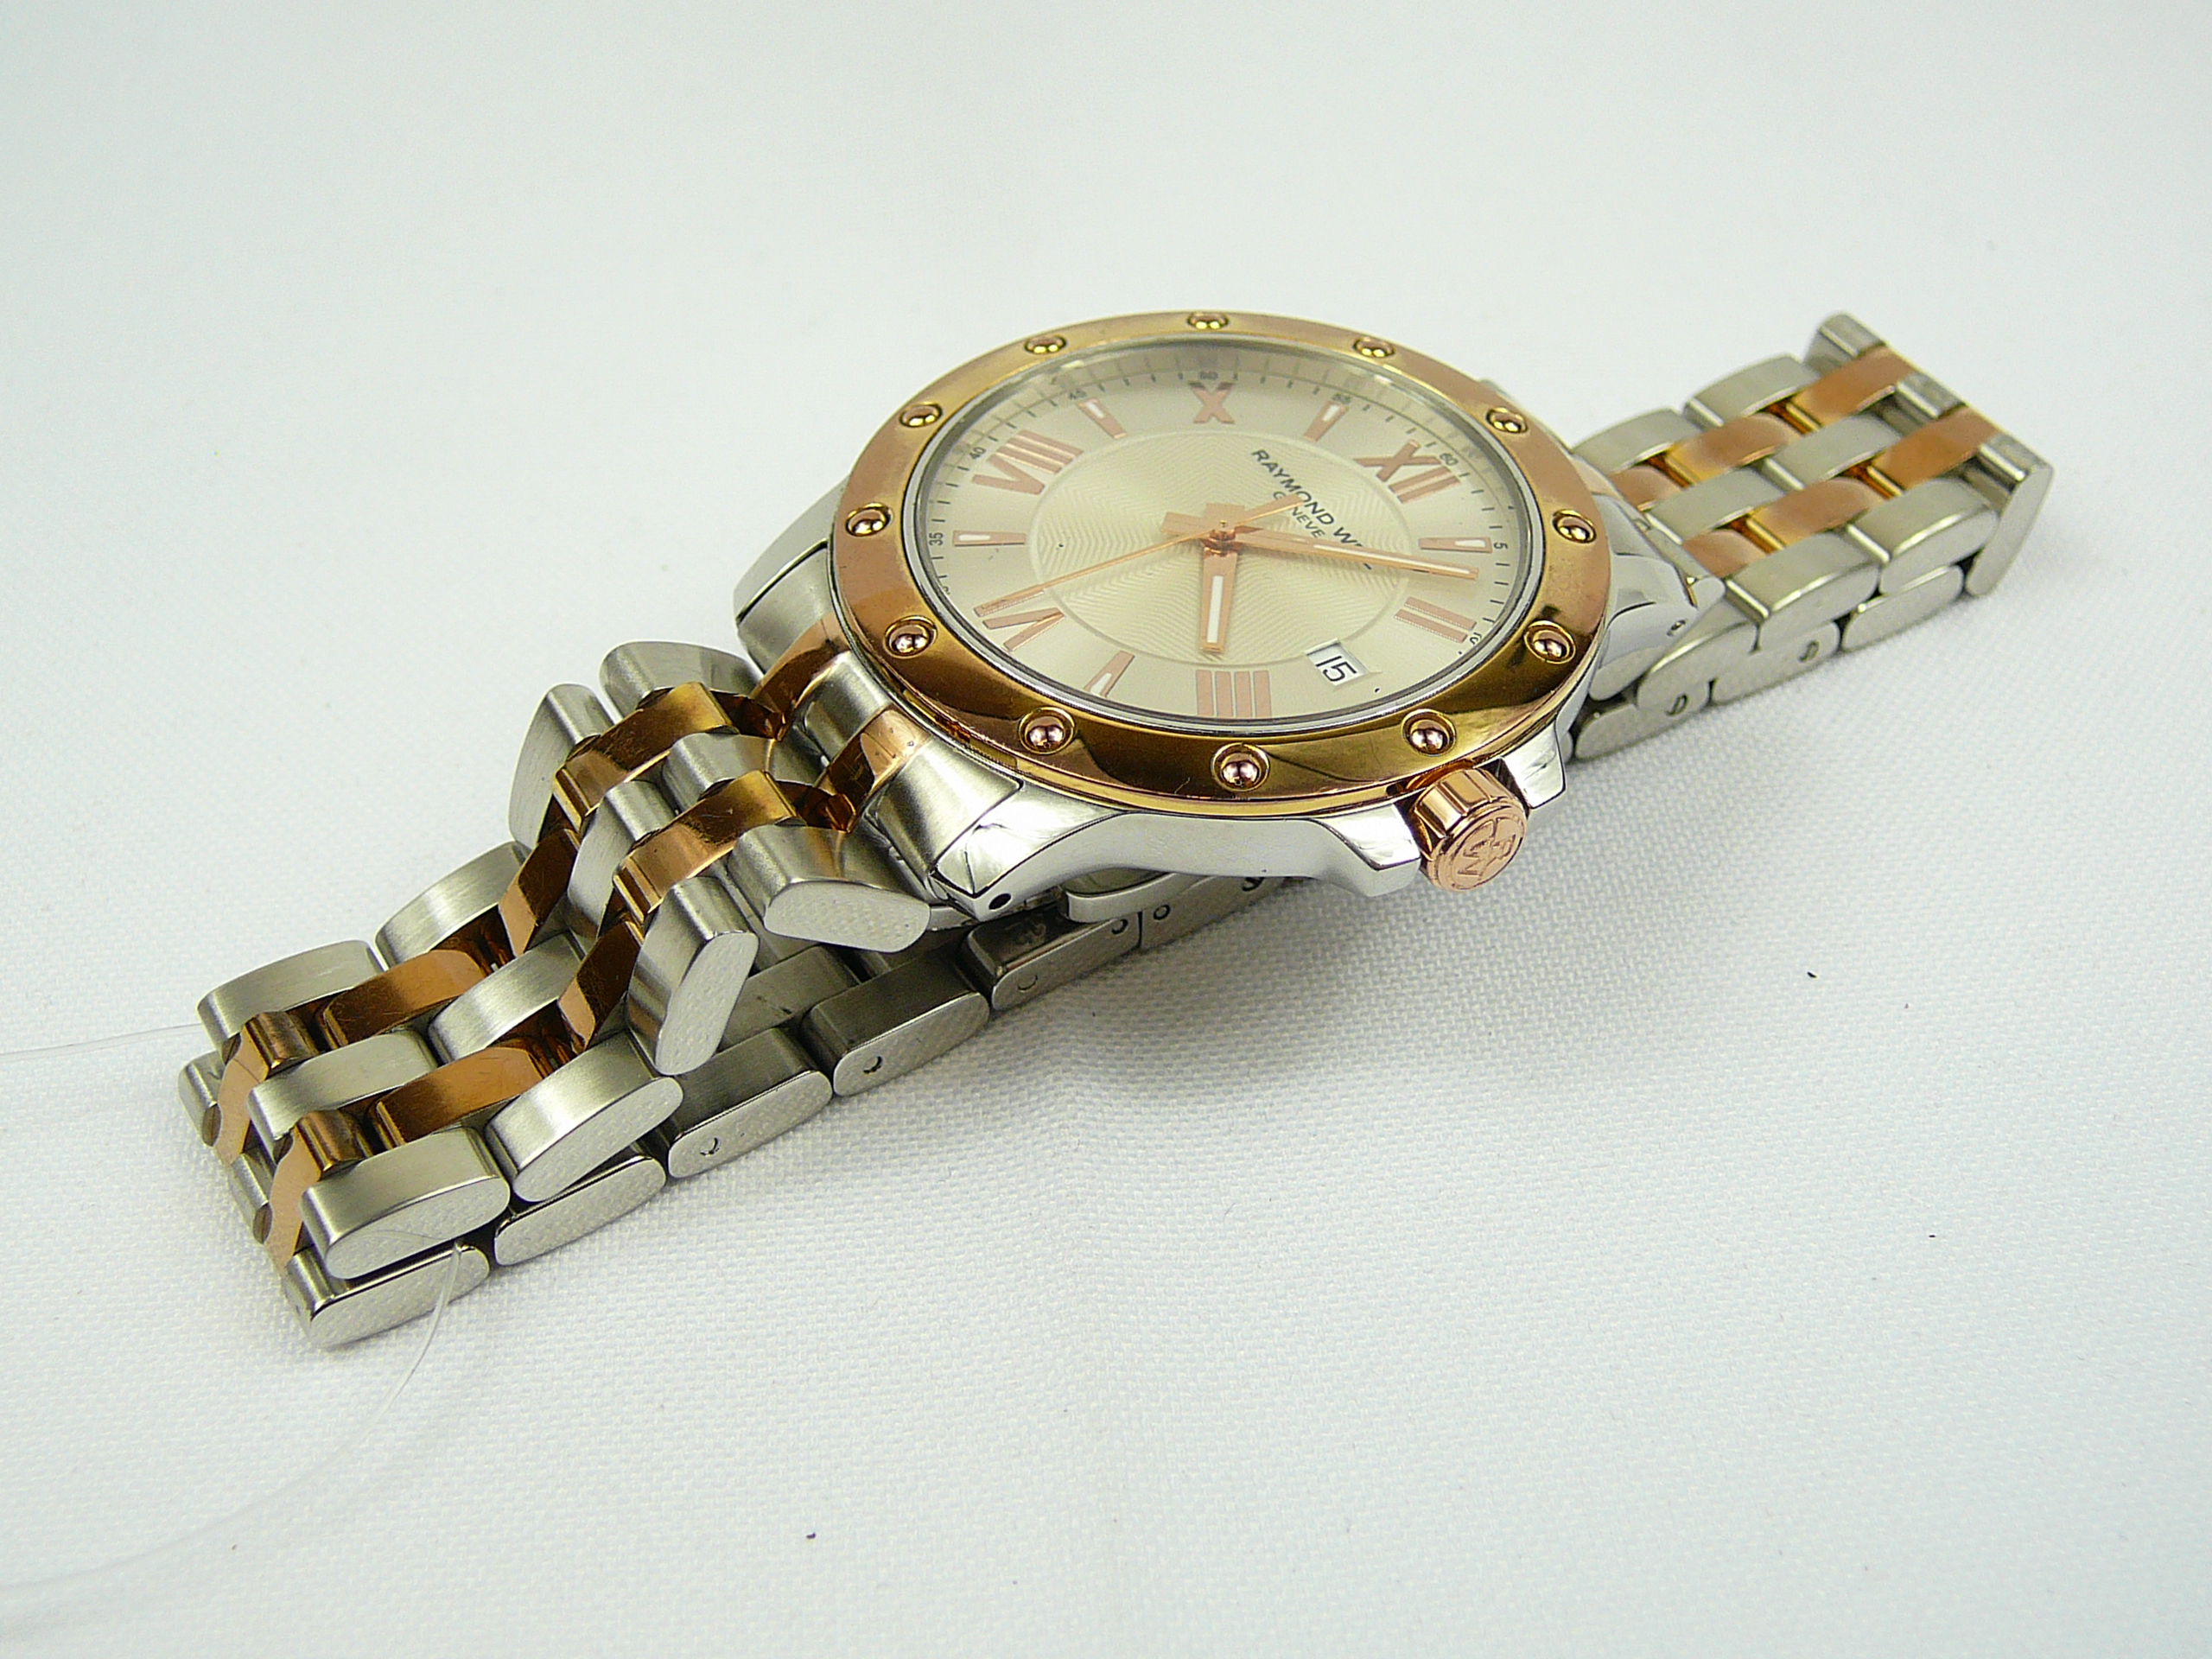 Gents Raymond Weil wrist watch - Image 2 of 3